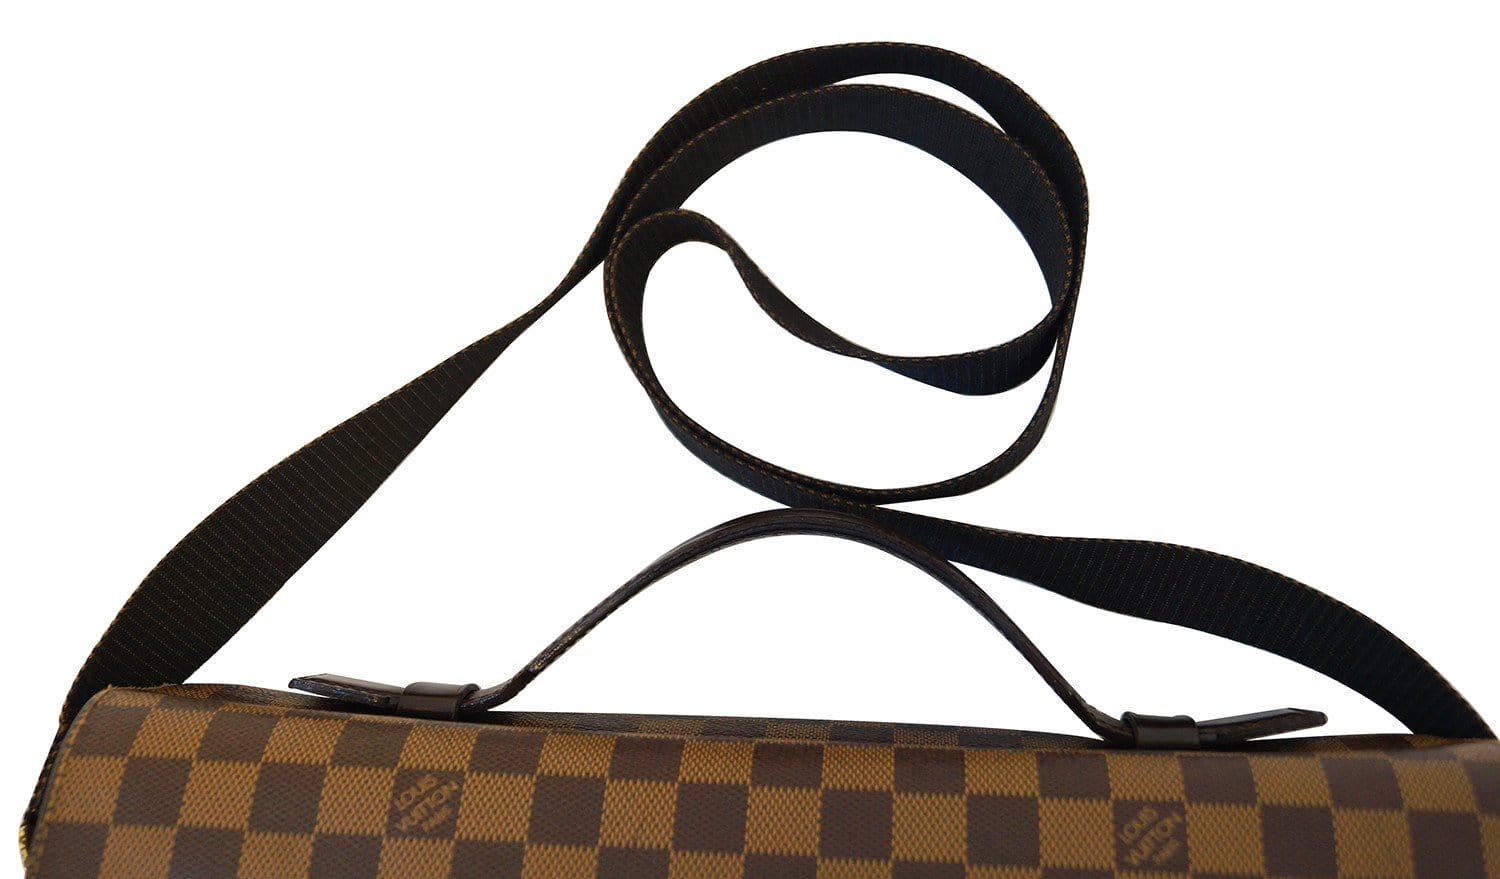 Pre-Owned Louis Vuitton Broadway Damier Ebene Shoulder Bag - Very